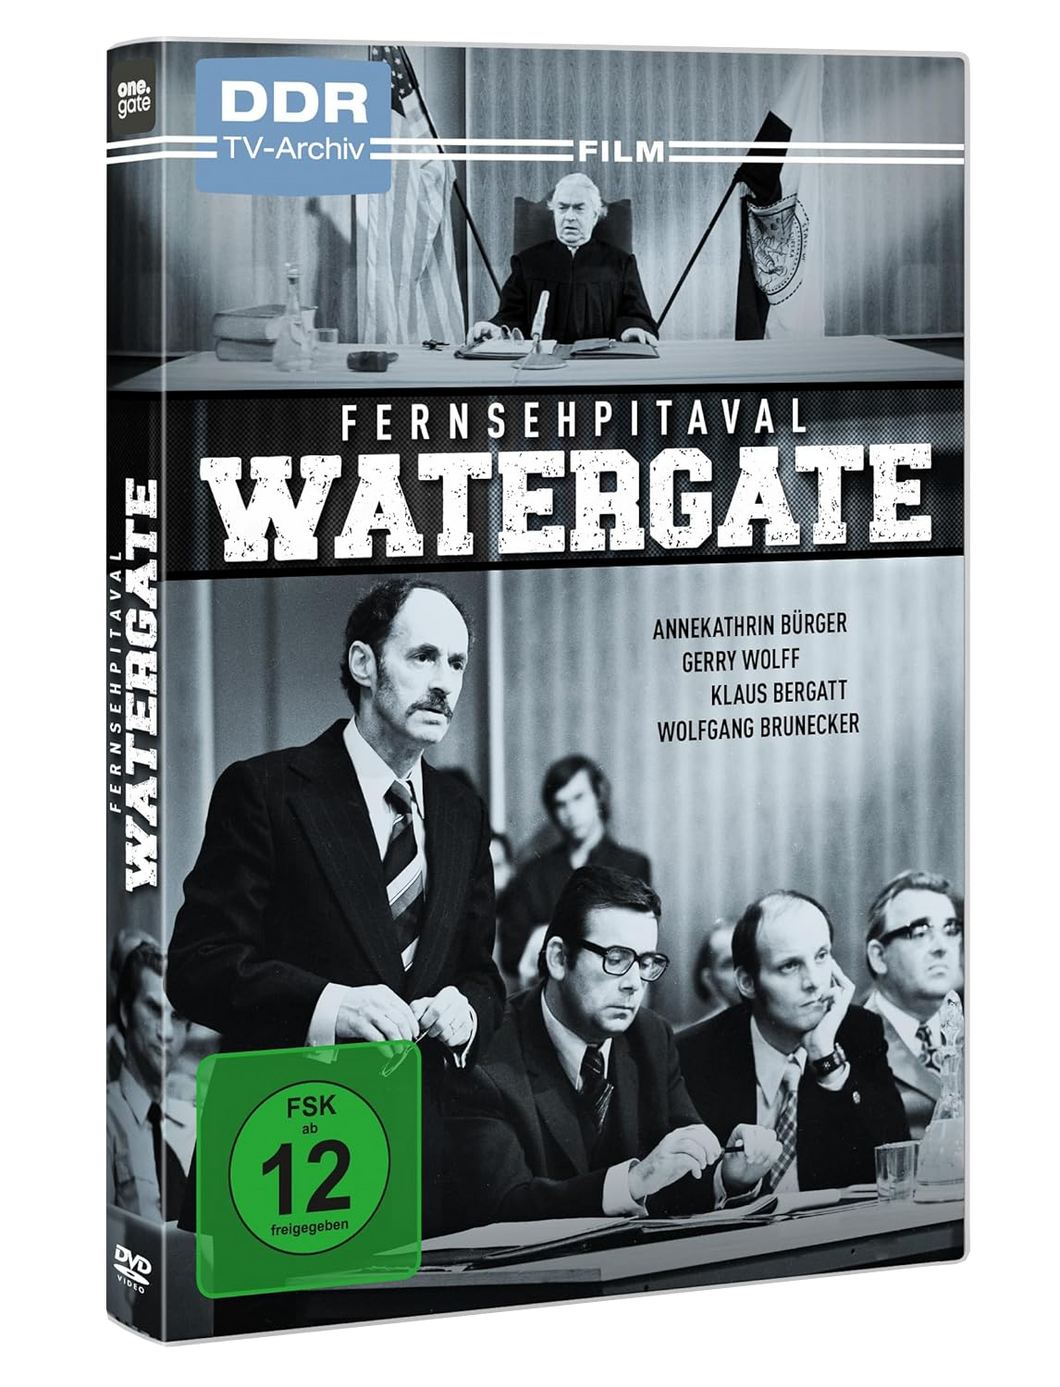 Watergate (Fernsehpitaval) (DVD)